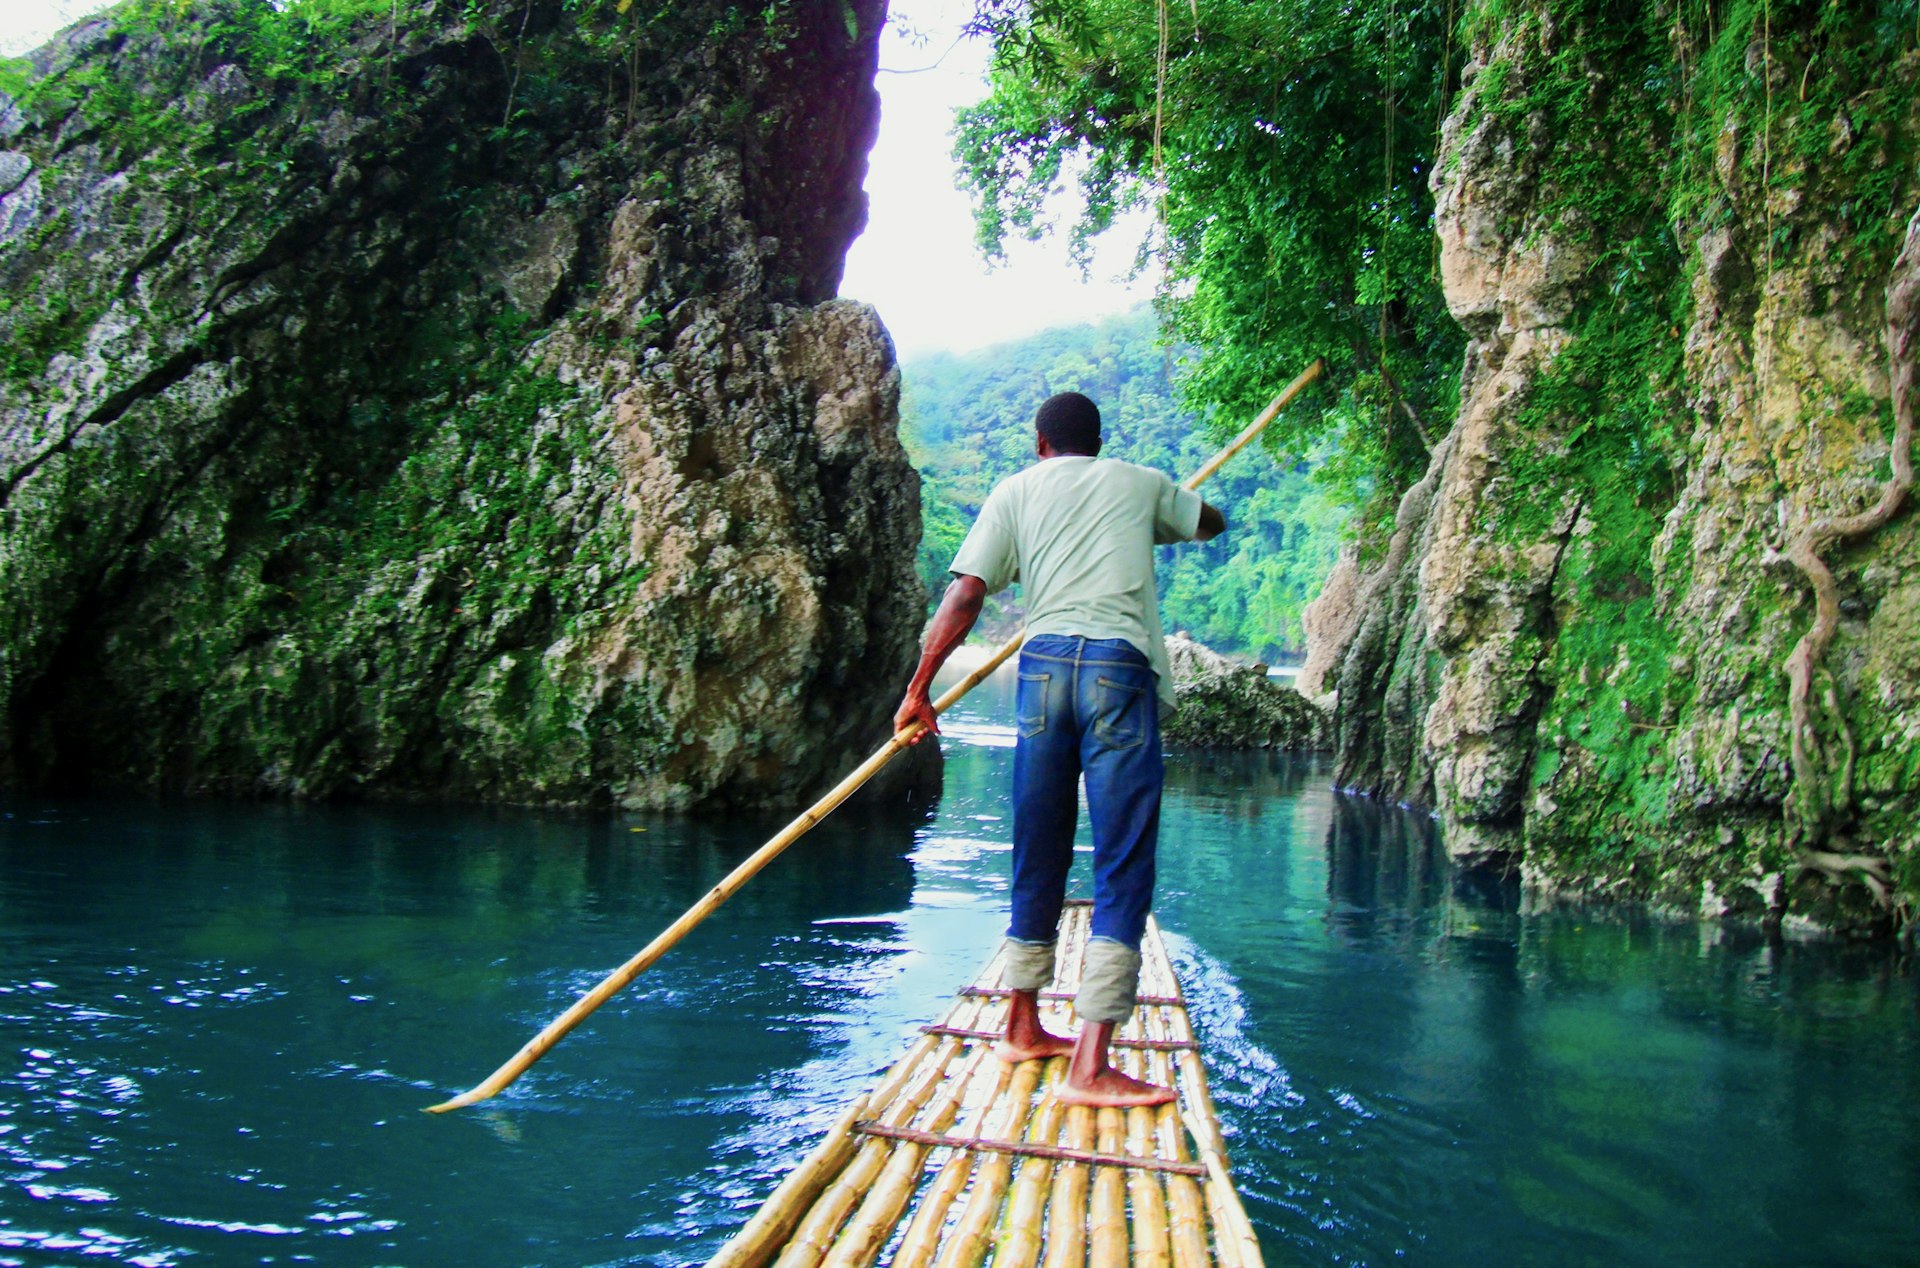 A man paddles a bamboo raft down a river